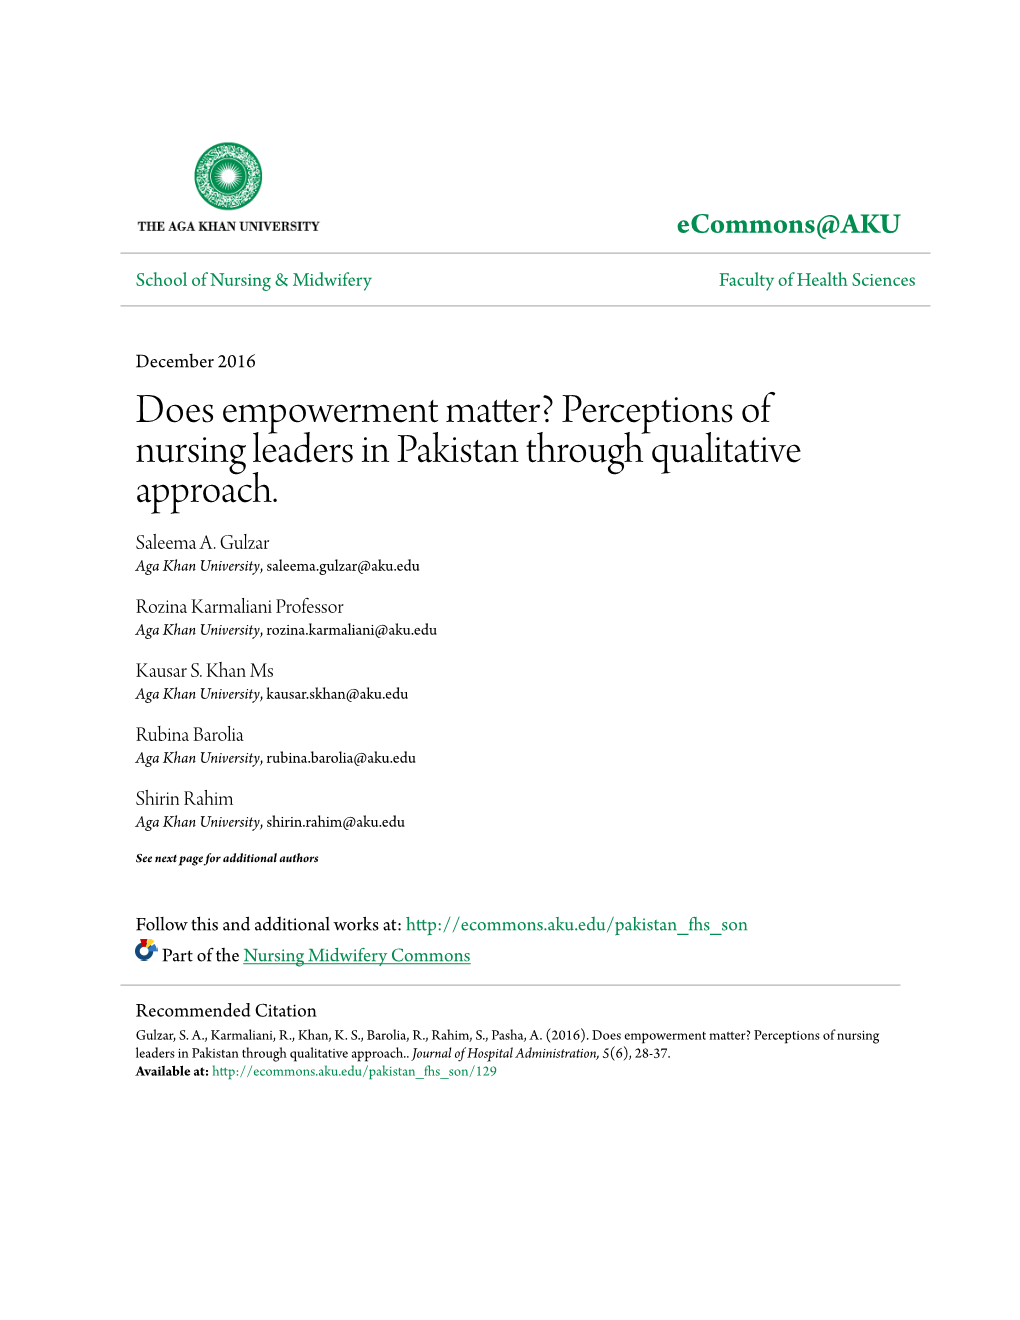 Perceptions of Nursing Leaders in Pakistan Through Qualitative Approach